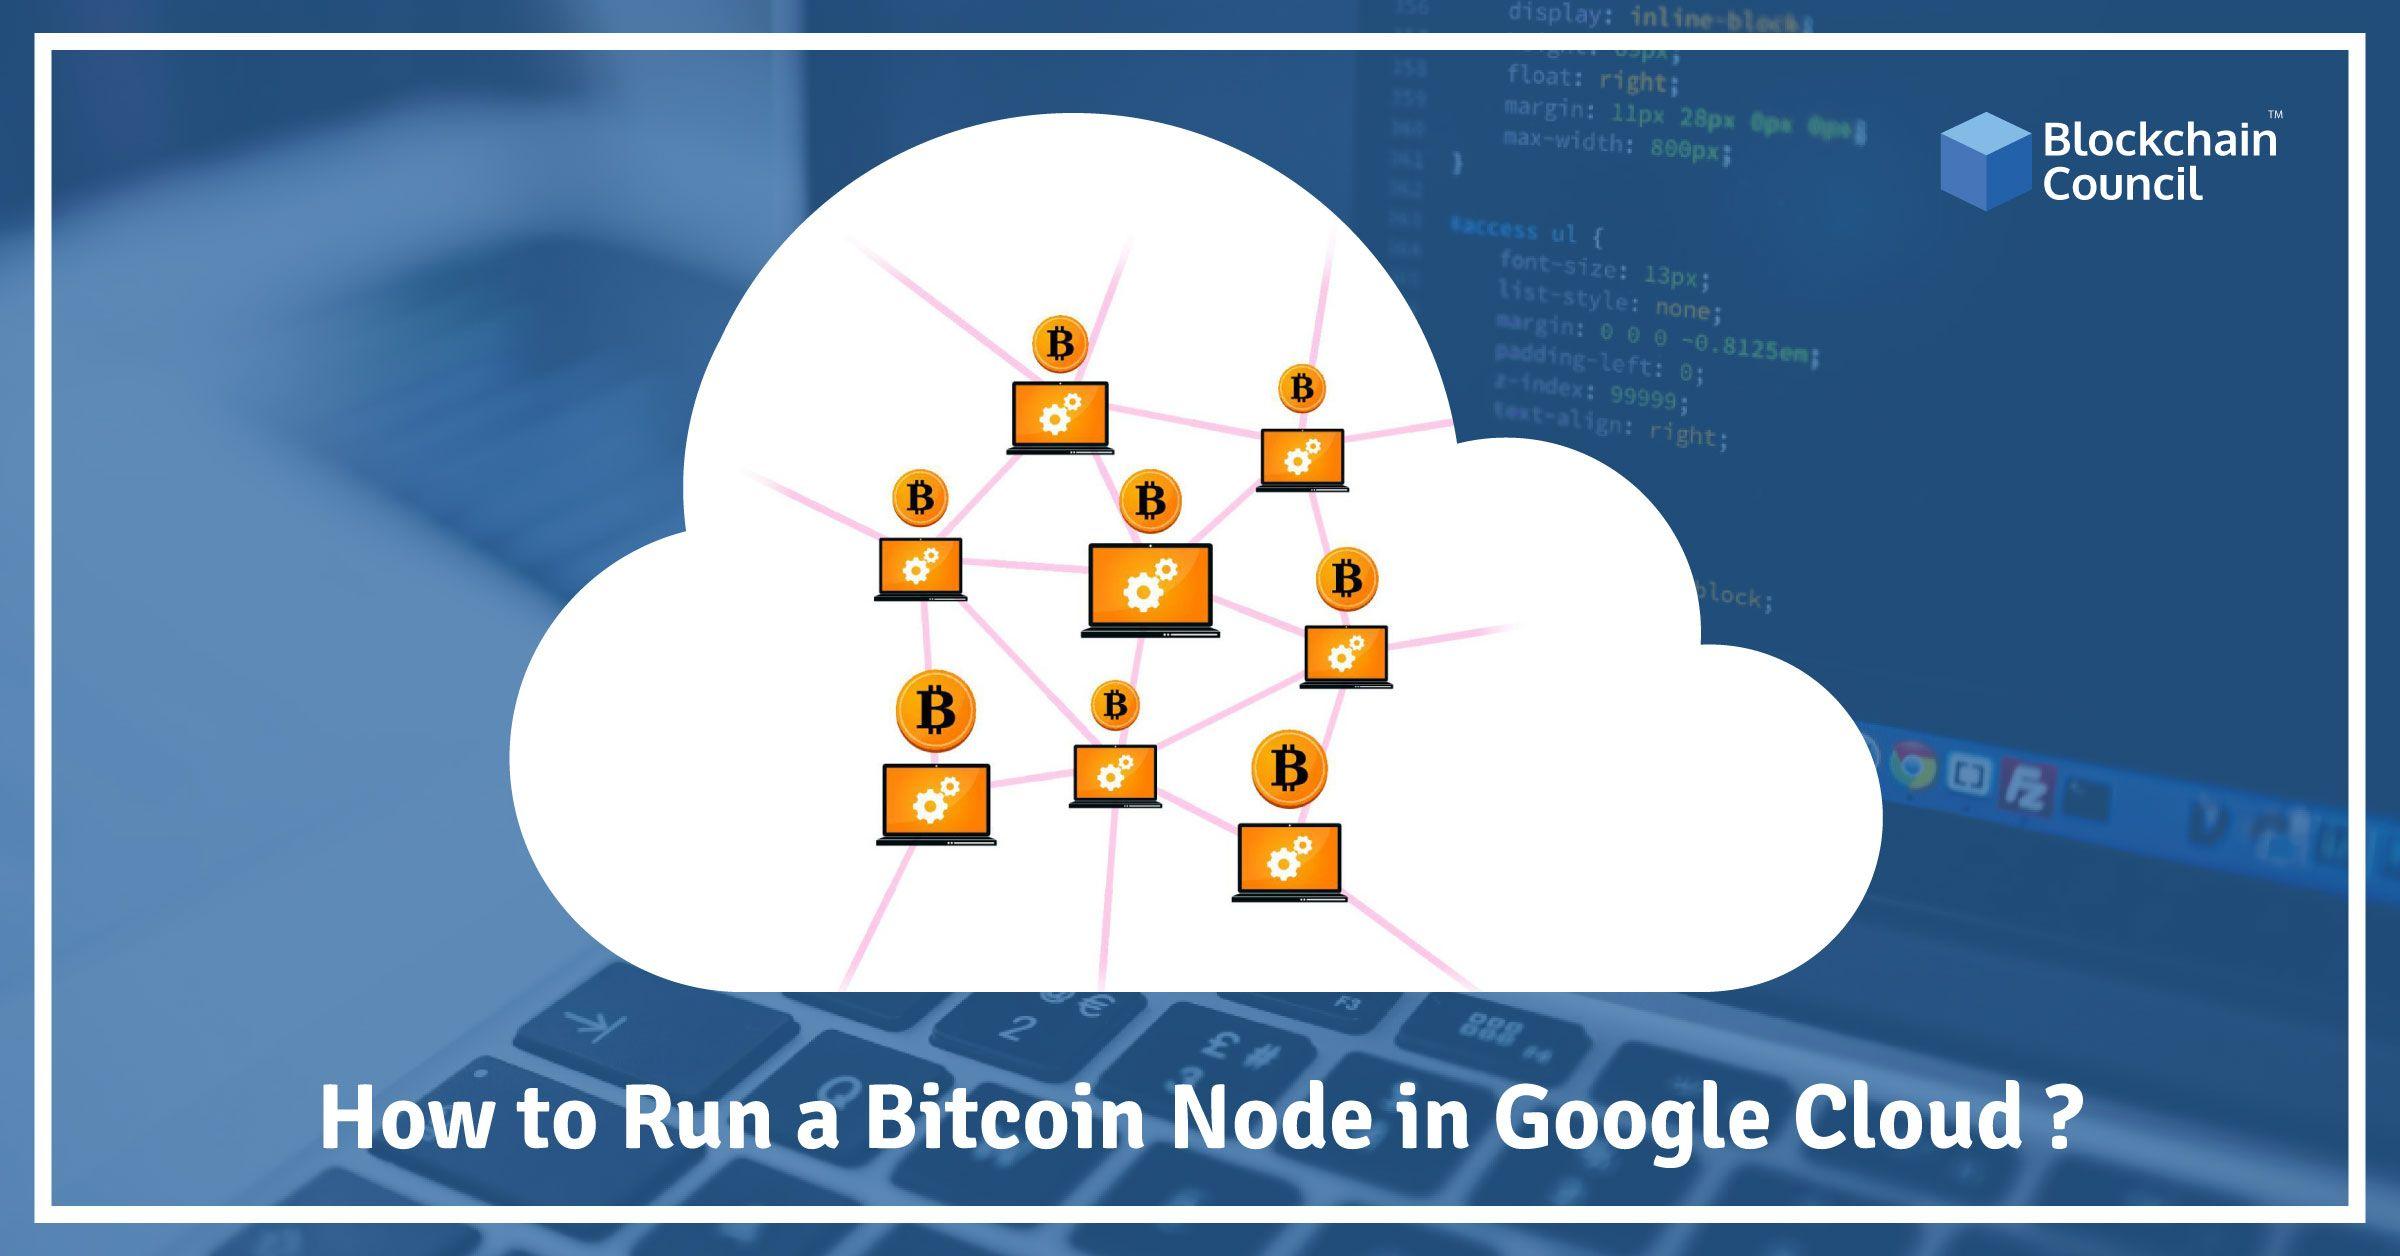 Blockchain Cloud Logo - How To Run a Bitcoin Node in Google Cloud? | Blockchain Council